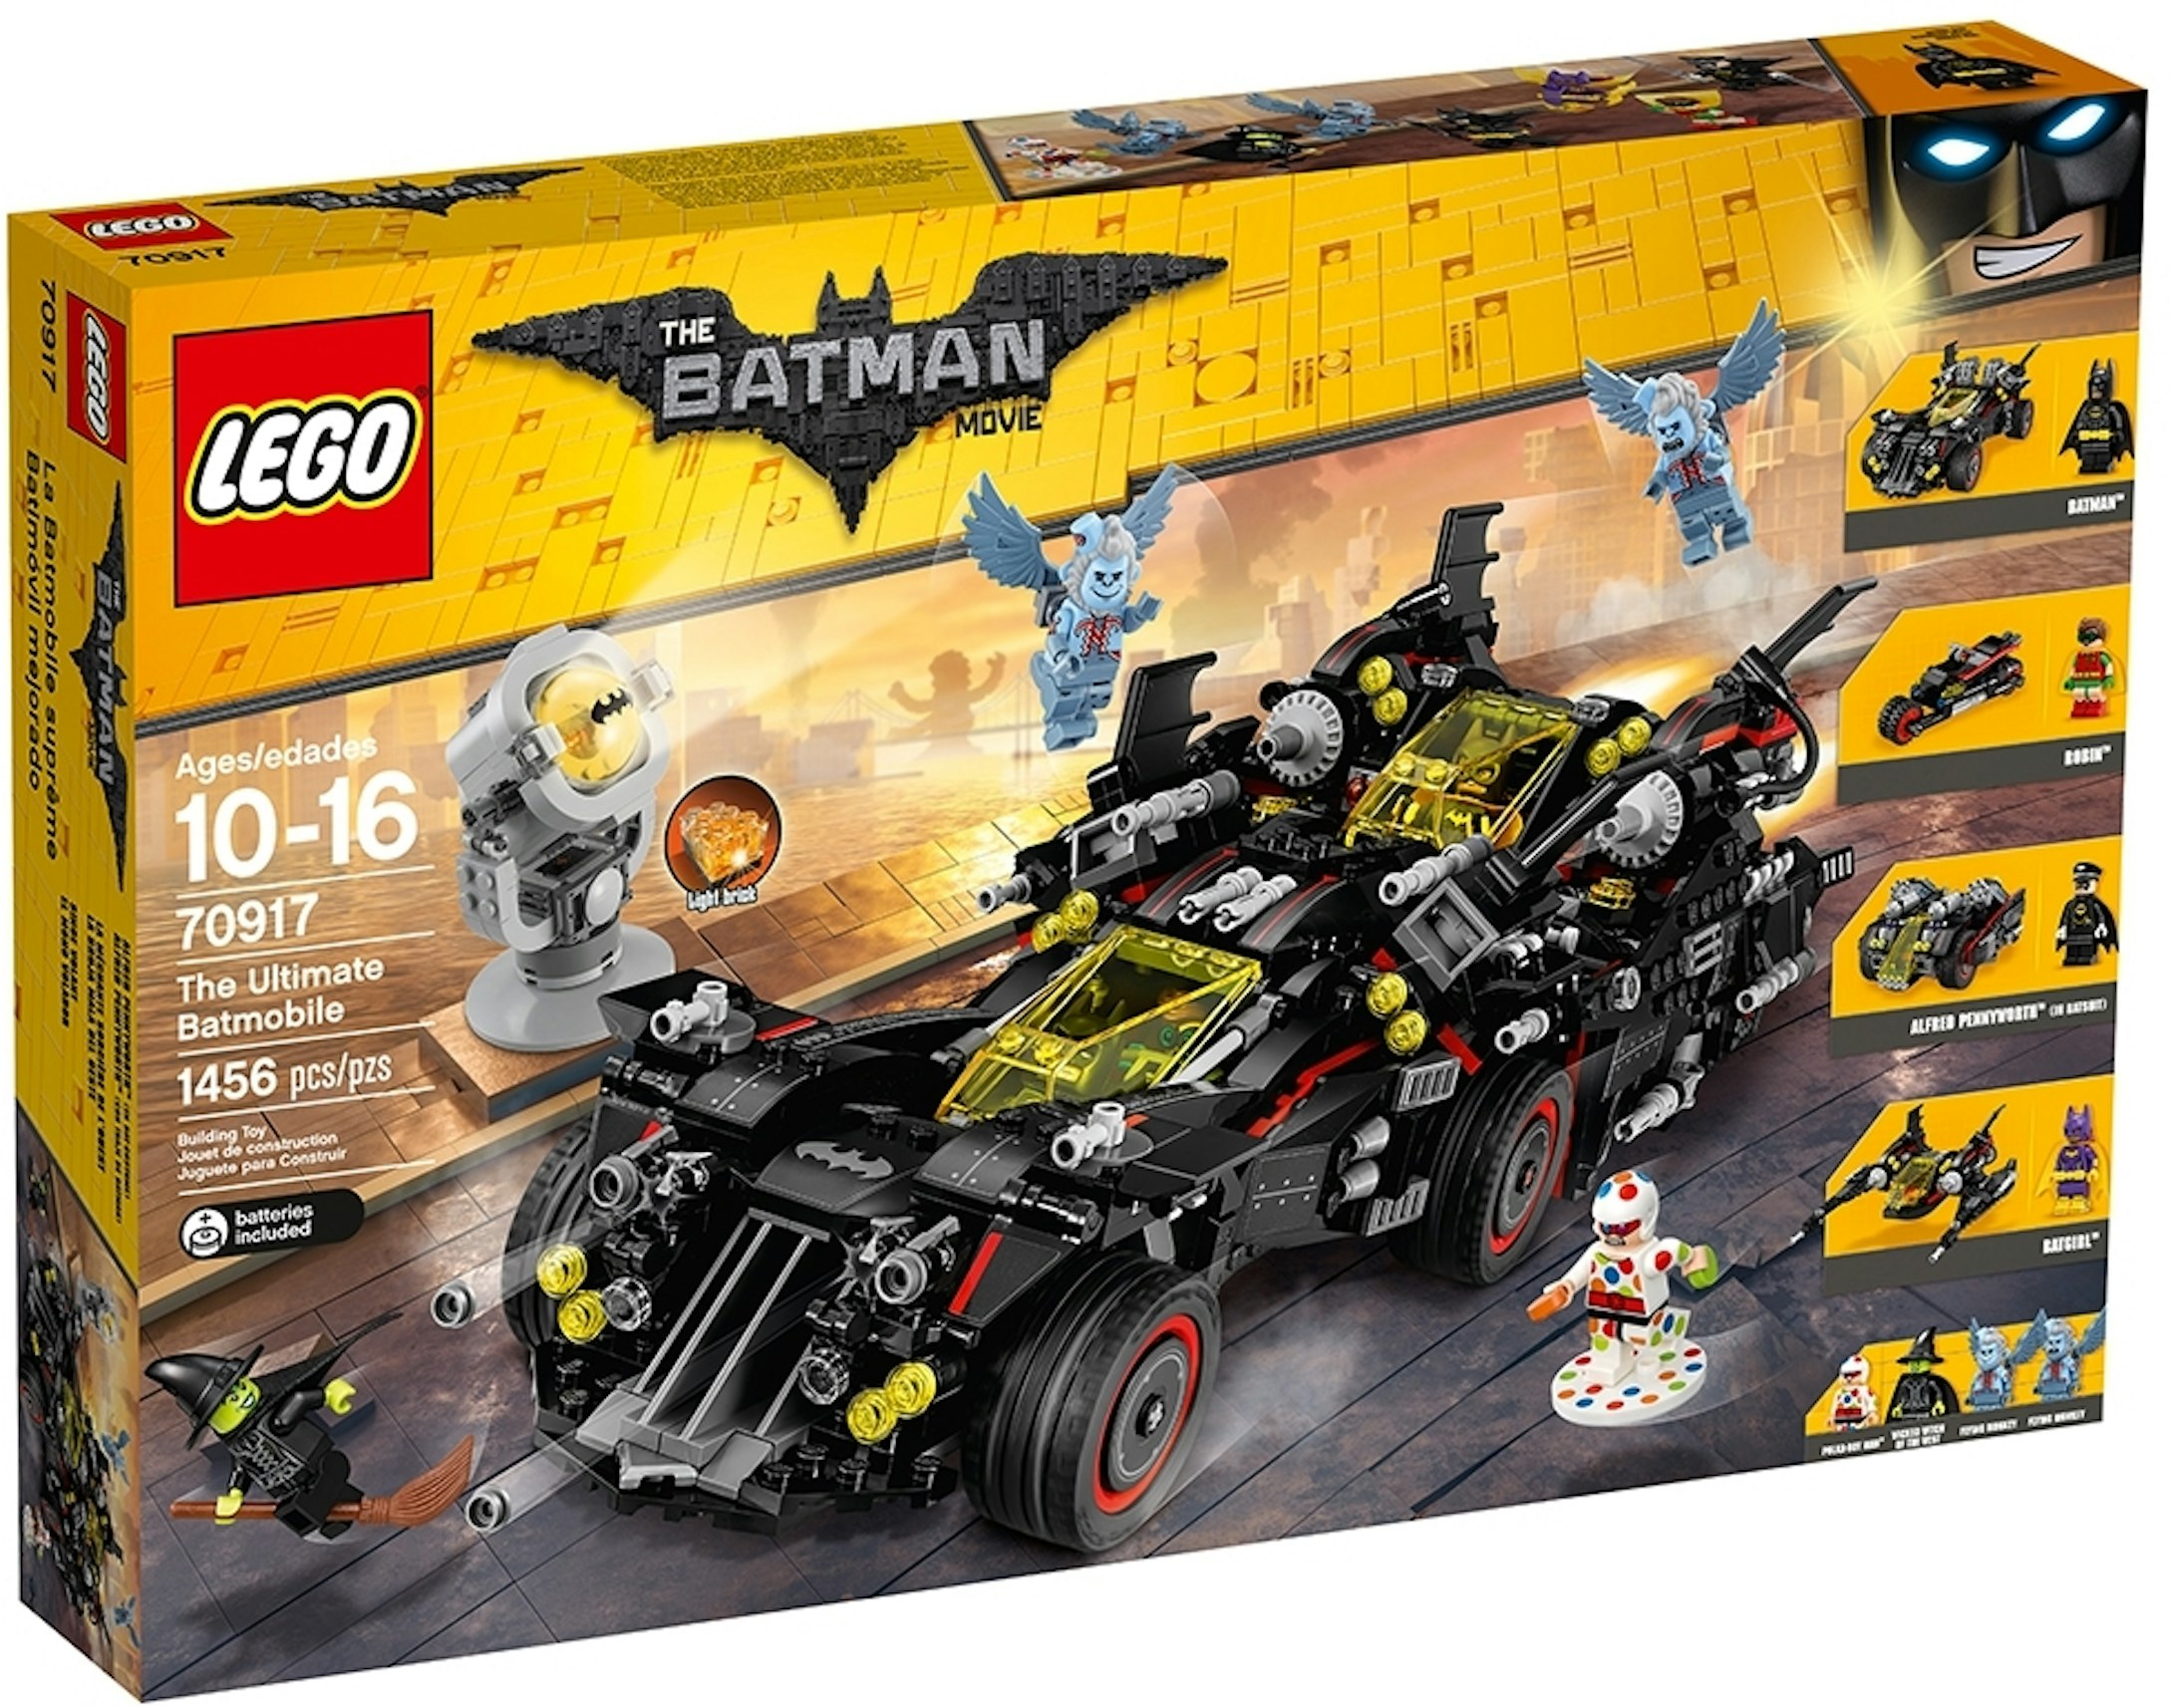 The Lego Batman Movie The Ultimate Batmobile Set - US